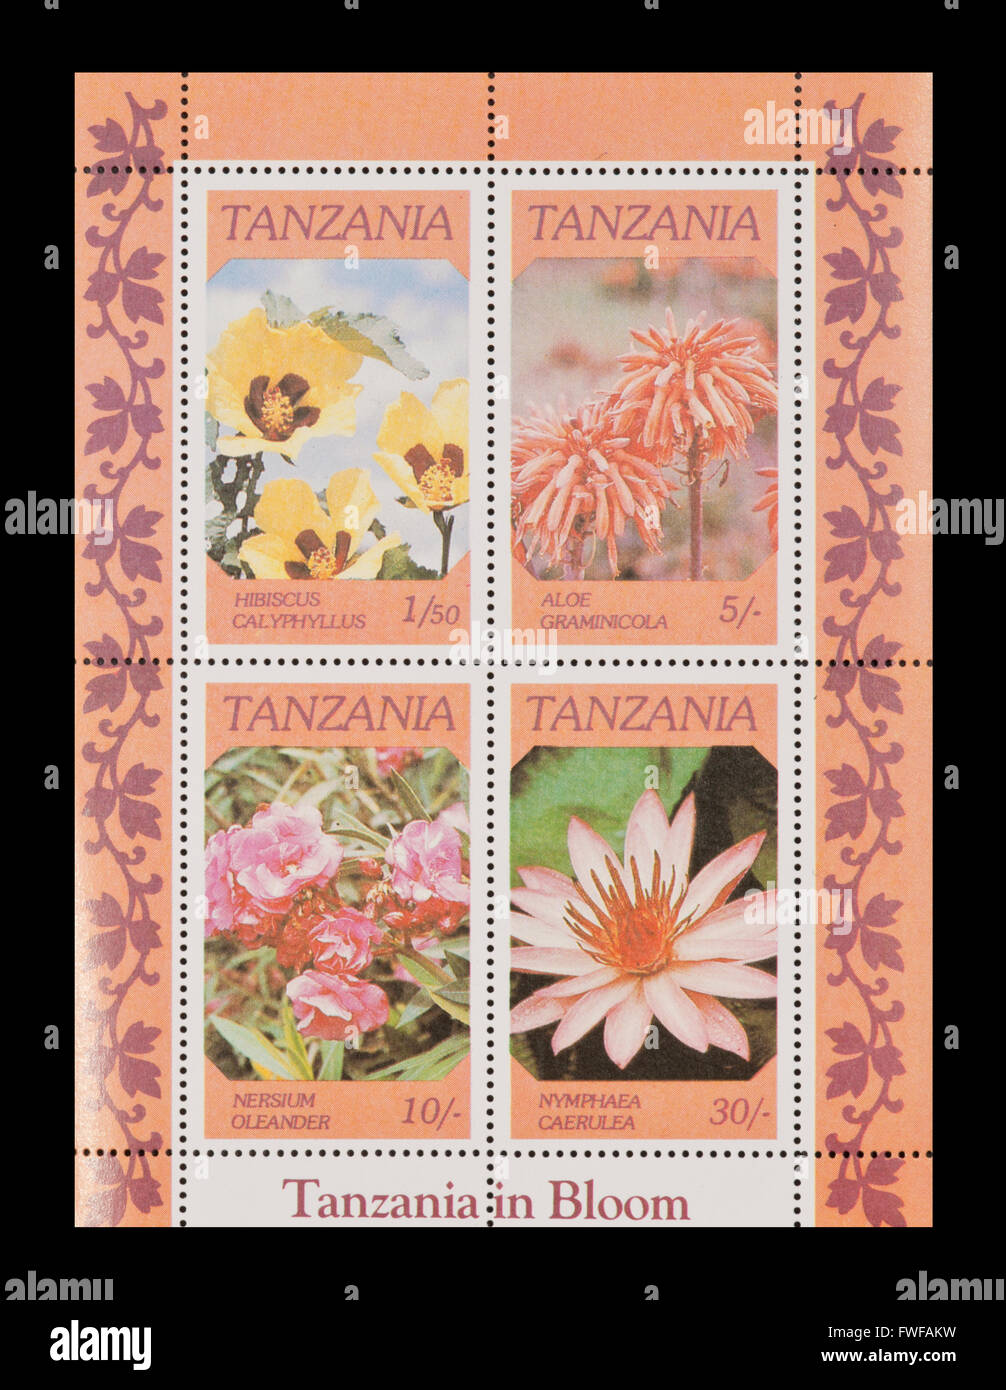 Miniature sheet from Tanzania showing four flowers:  Hibiscus calyphyllus, Aloe graminicola, Nersium oleander, Nymphus caerulea. Stock Photo